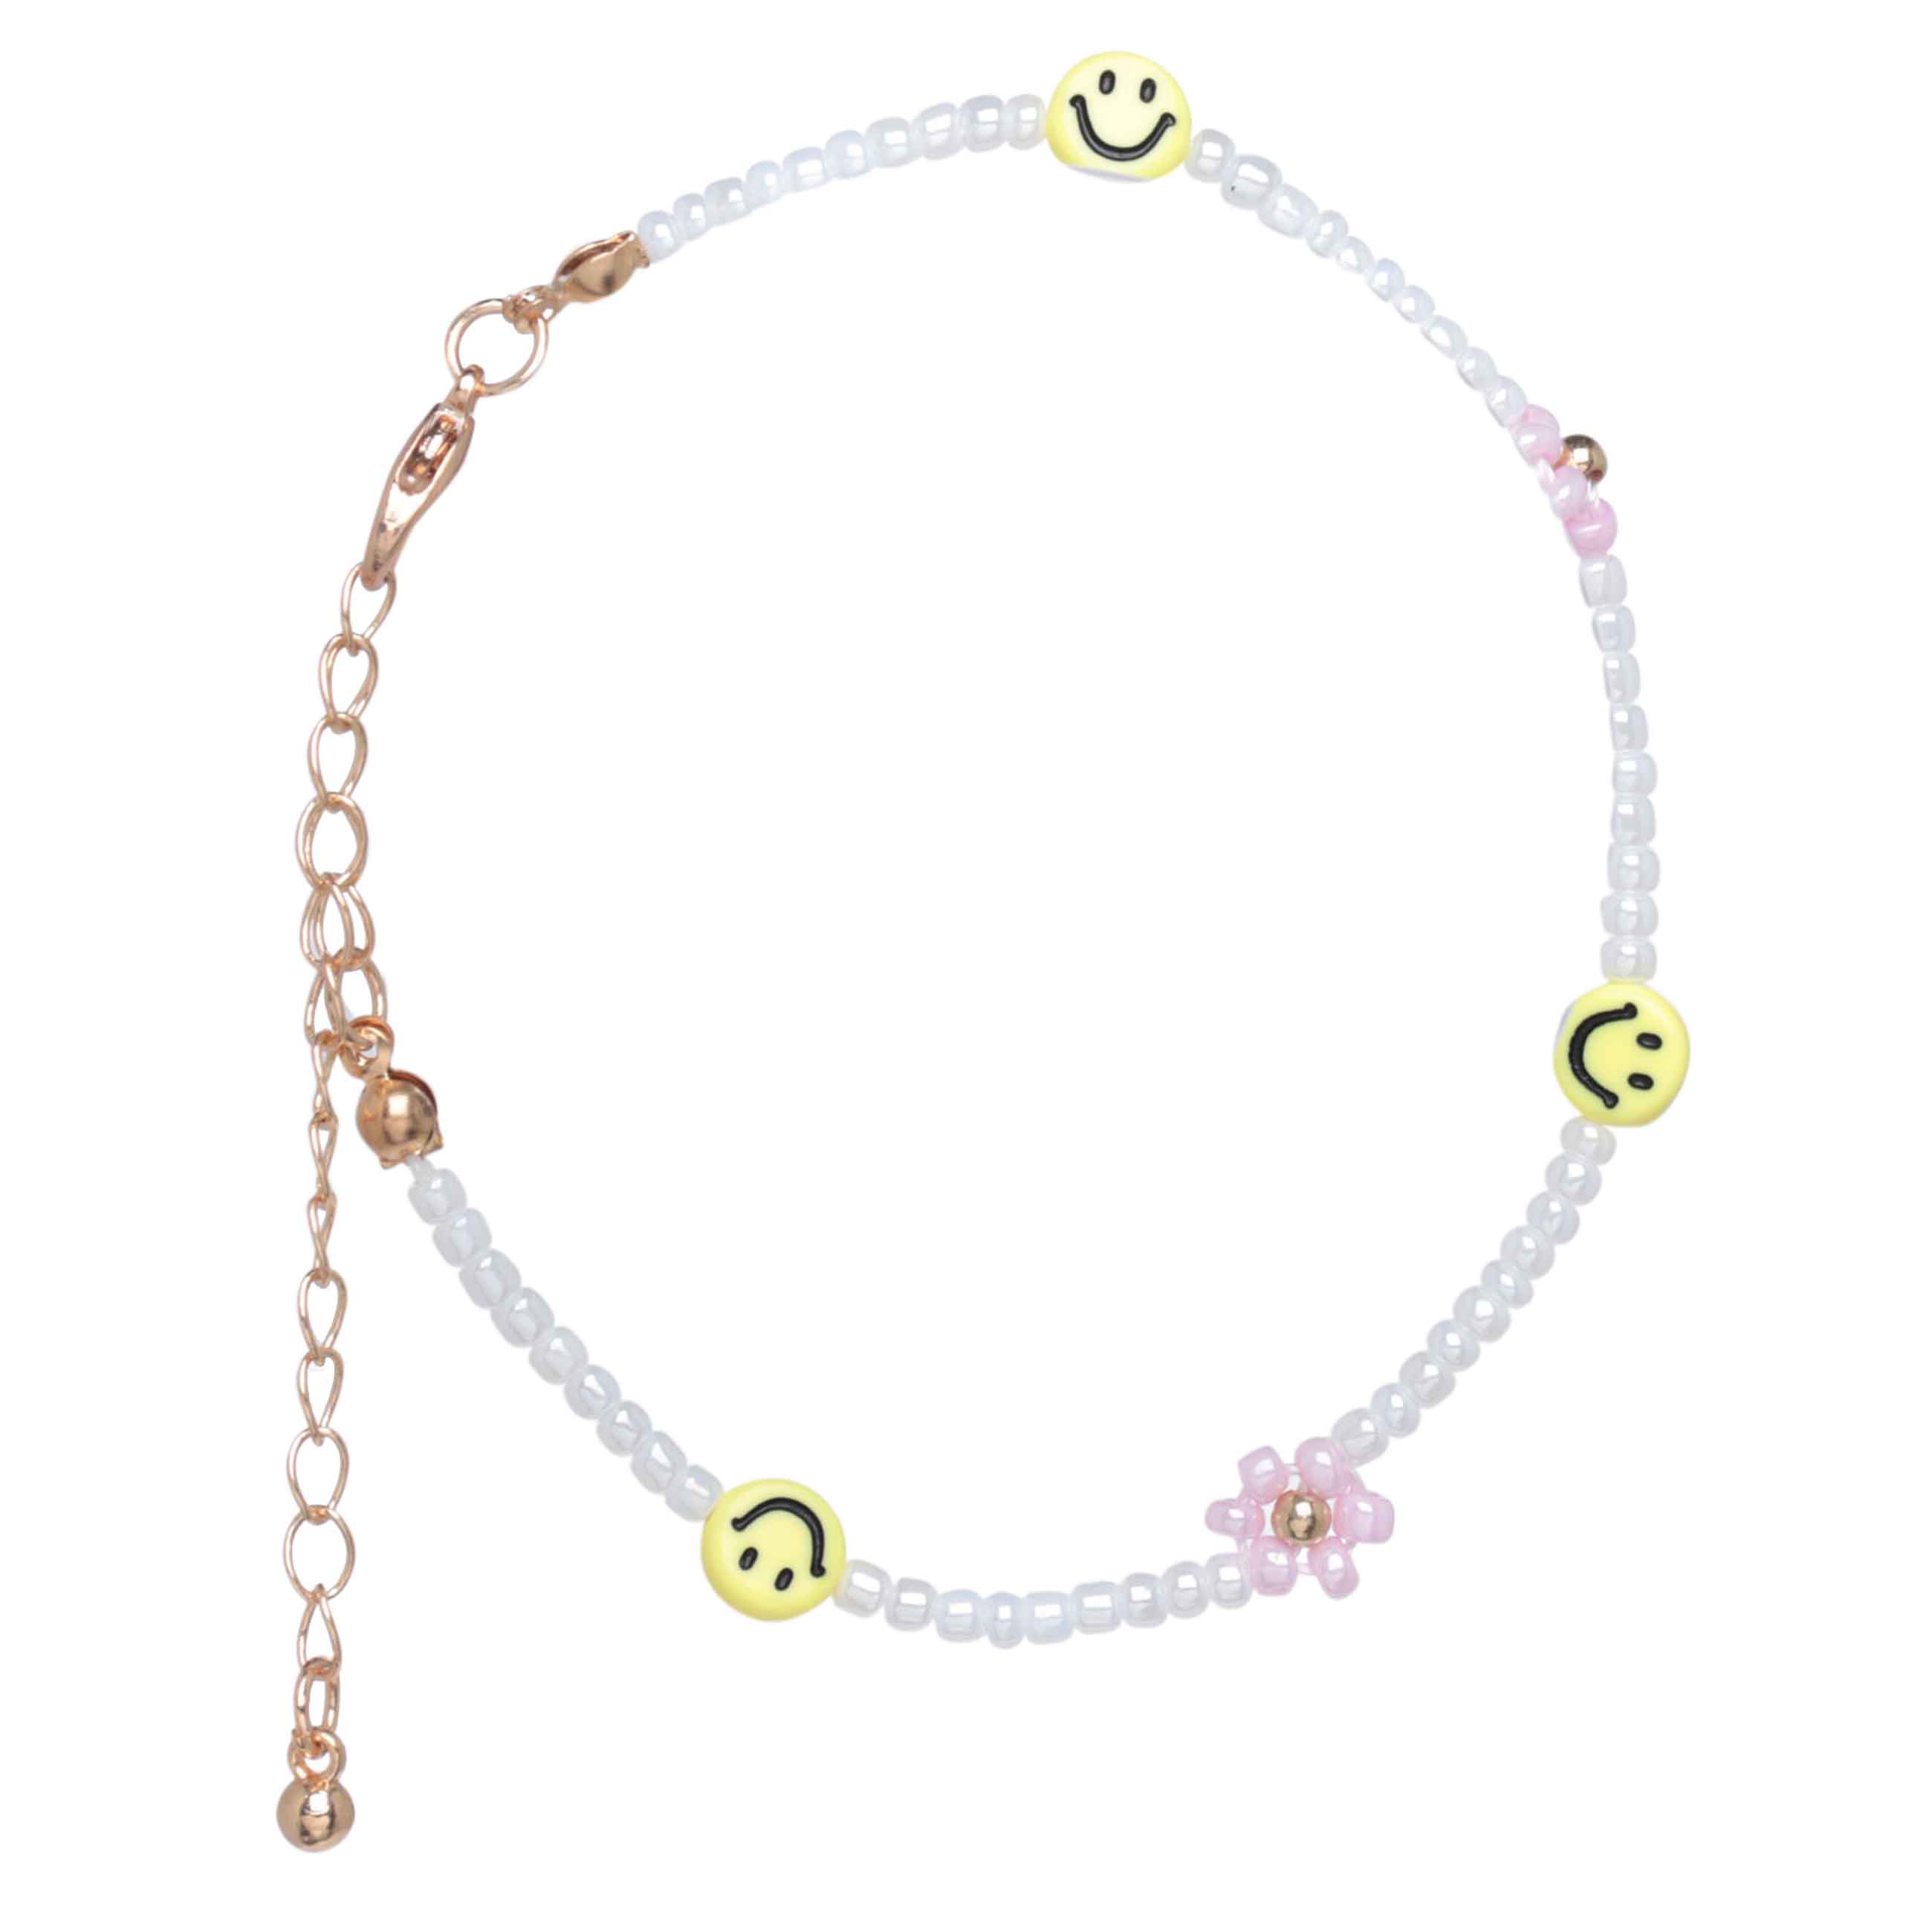 Bracelet, 23 cm, 3 pieces, for children, metal / plastic, colored, Smileys and beads, Pearl color изображение № 3